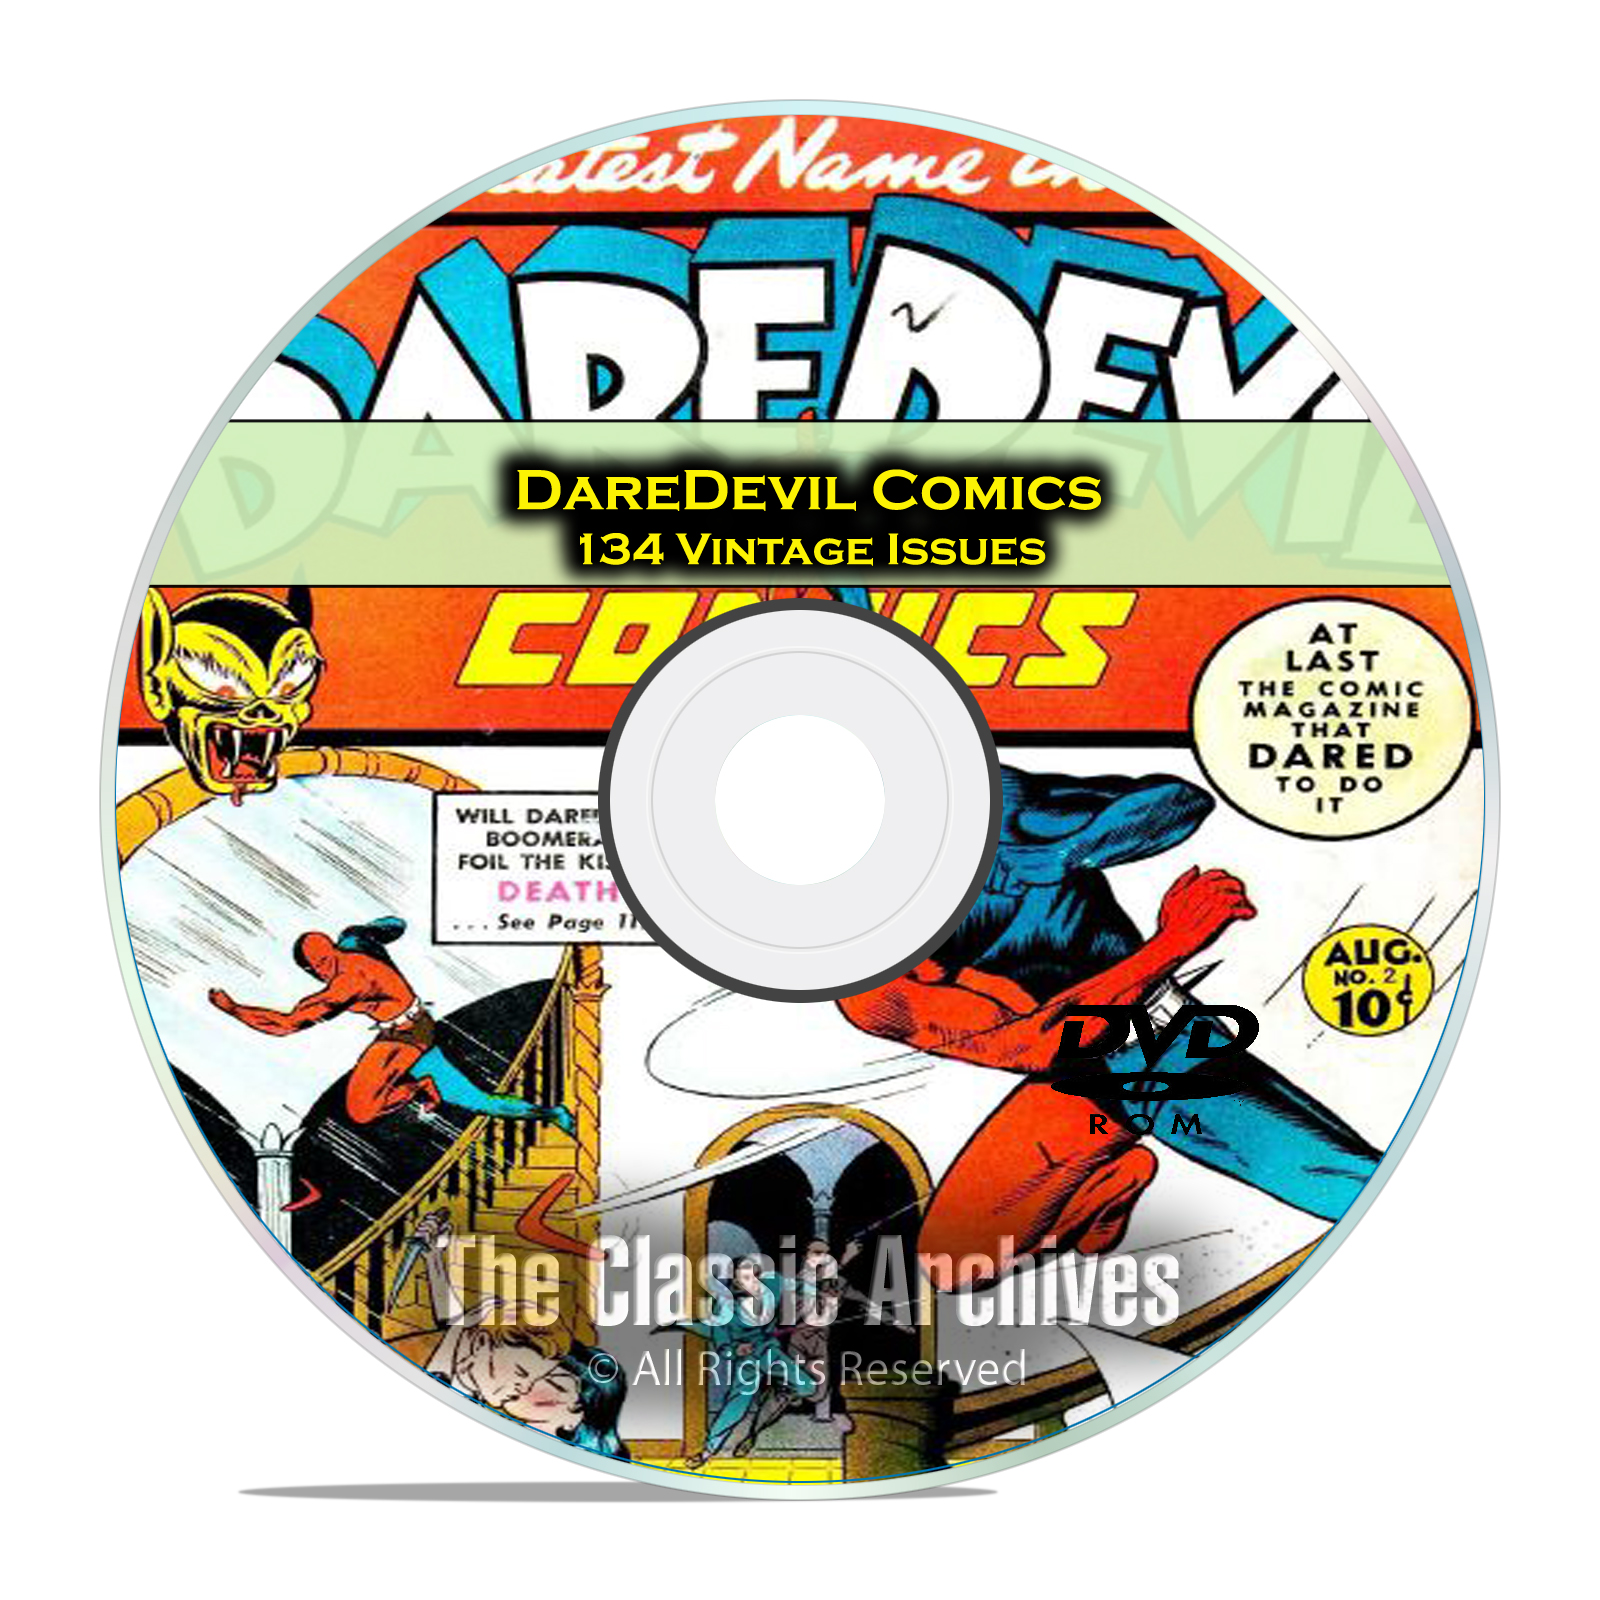 DareDevil Comics, 134 Back Issues, Full Color, PDF, Golden Age Comics DVD